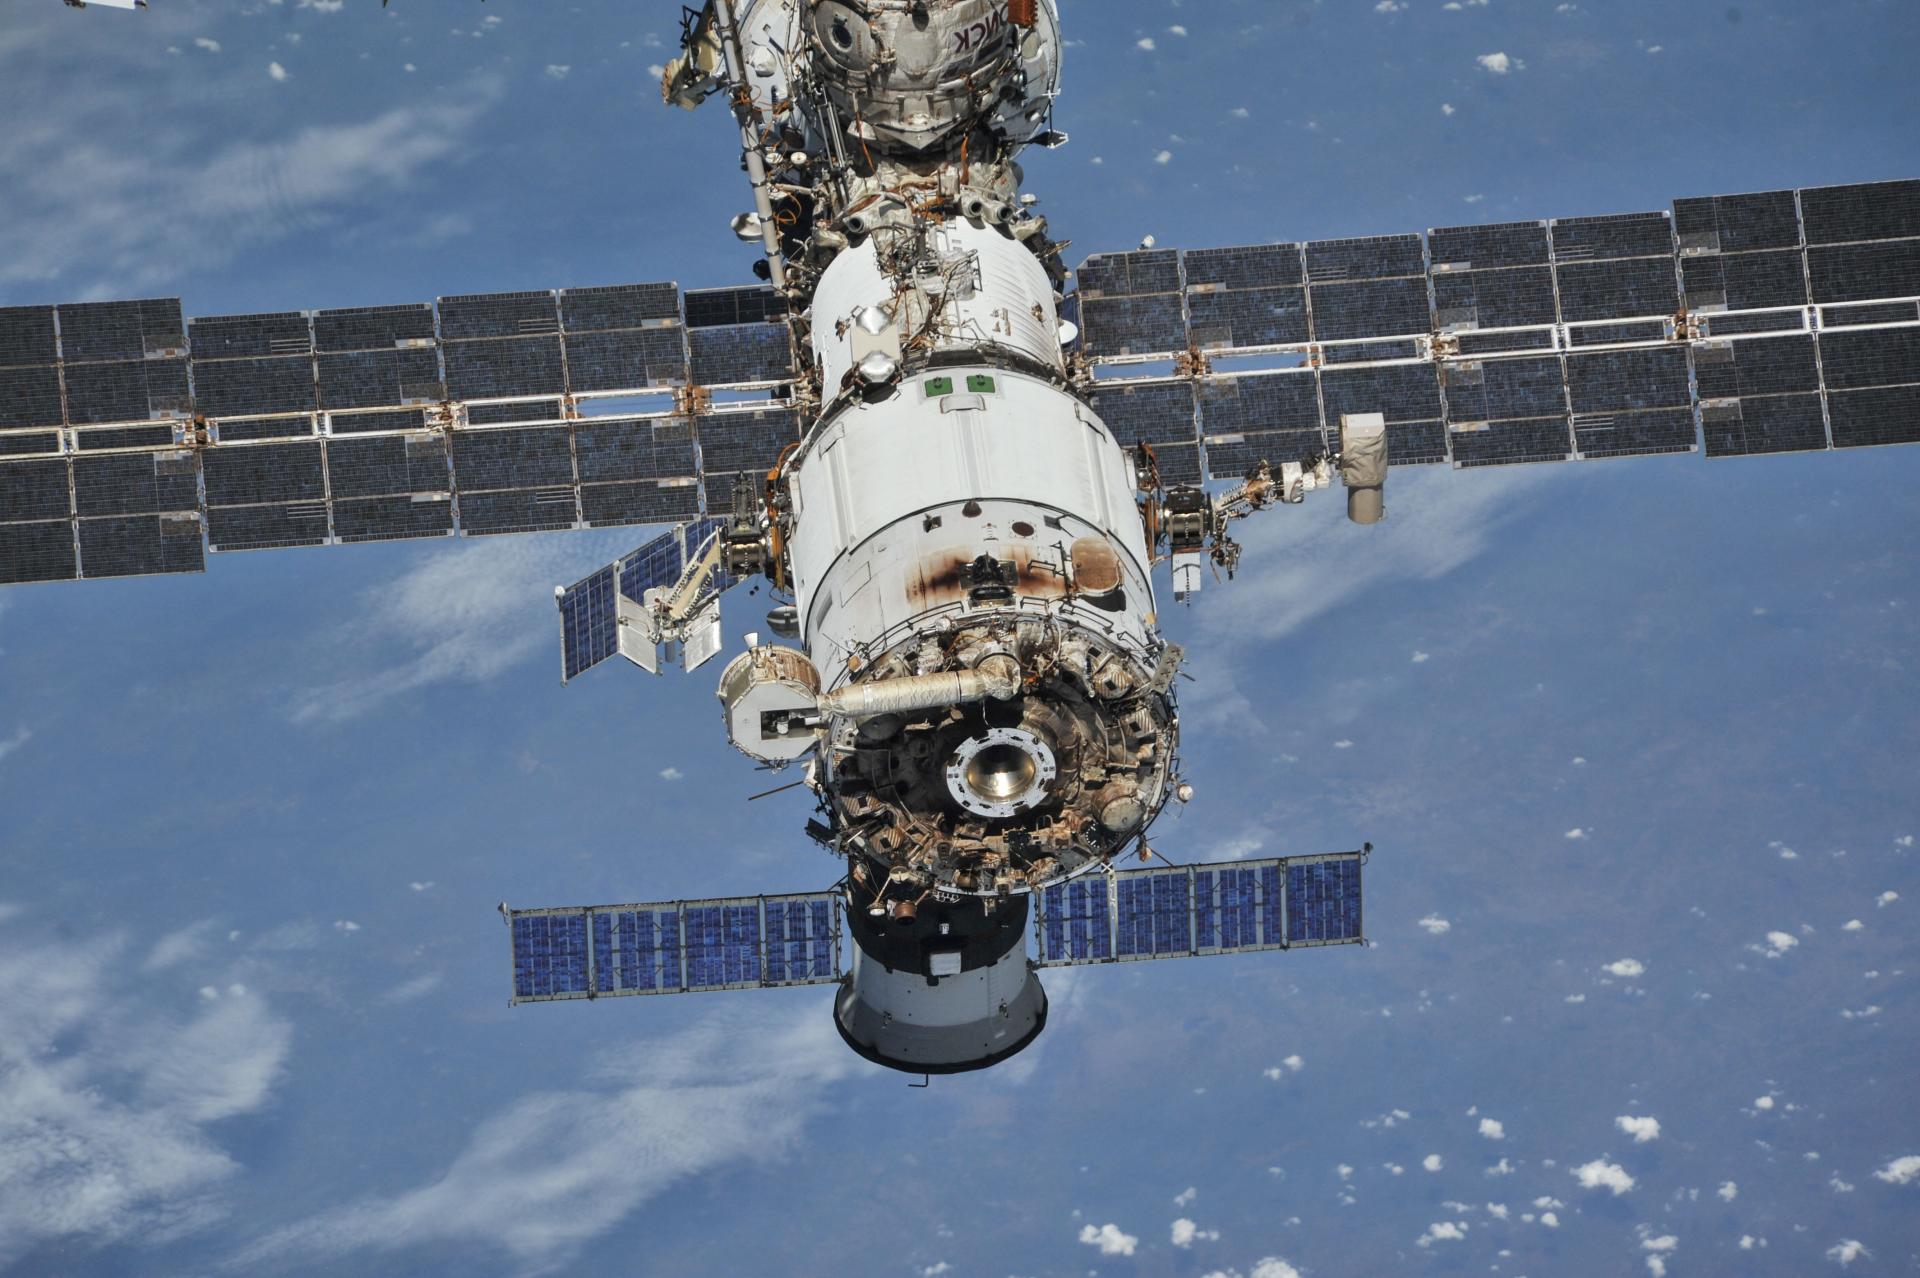 Objekt, ktorý poškodil dom na Floride, je možno z vesmírnej stanice ISS